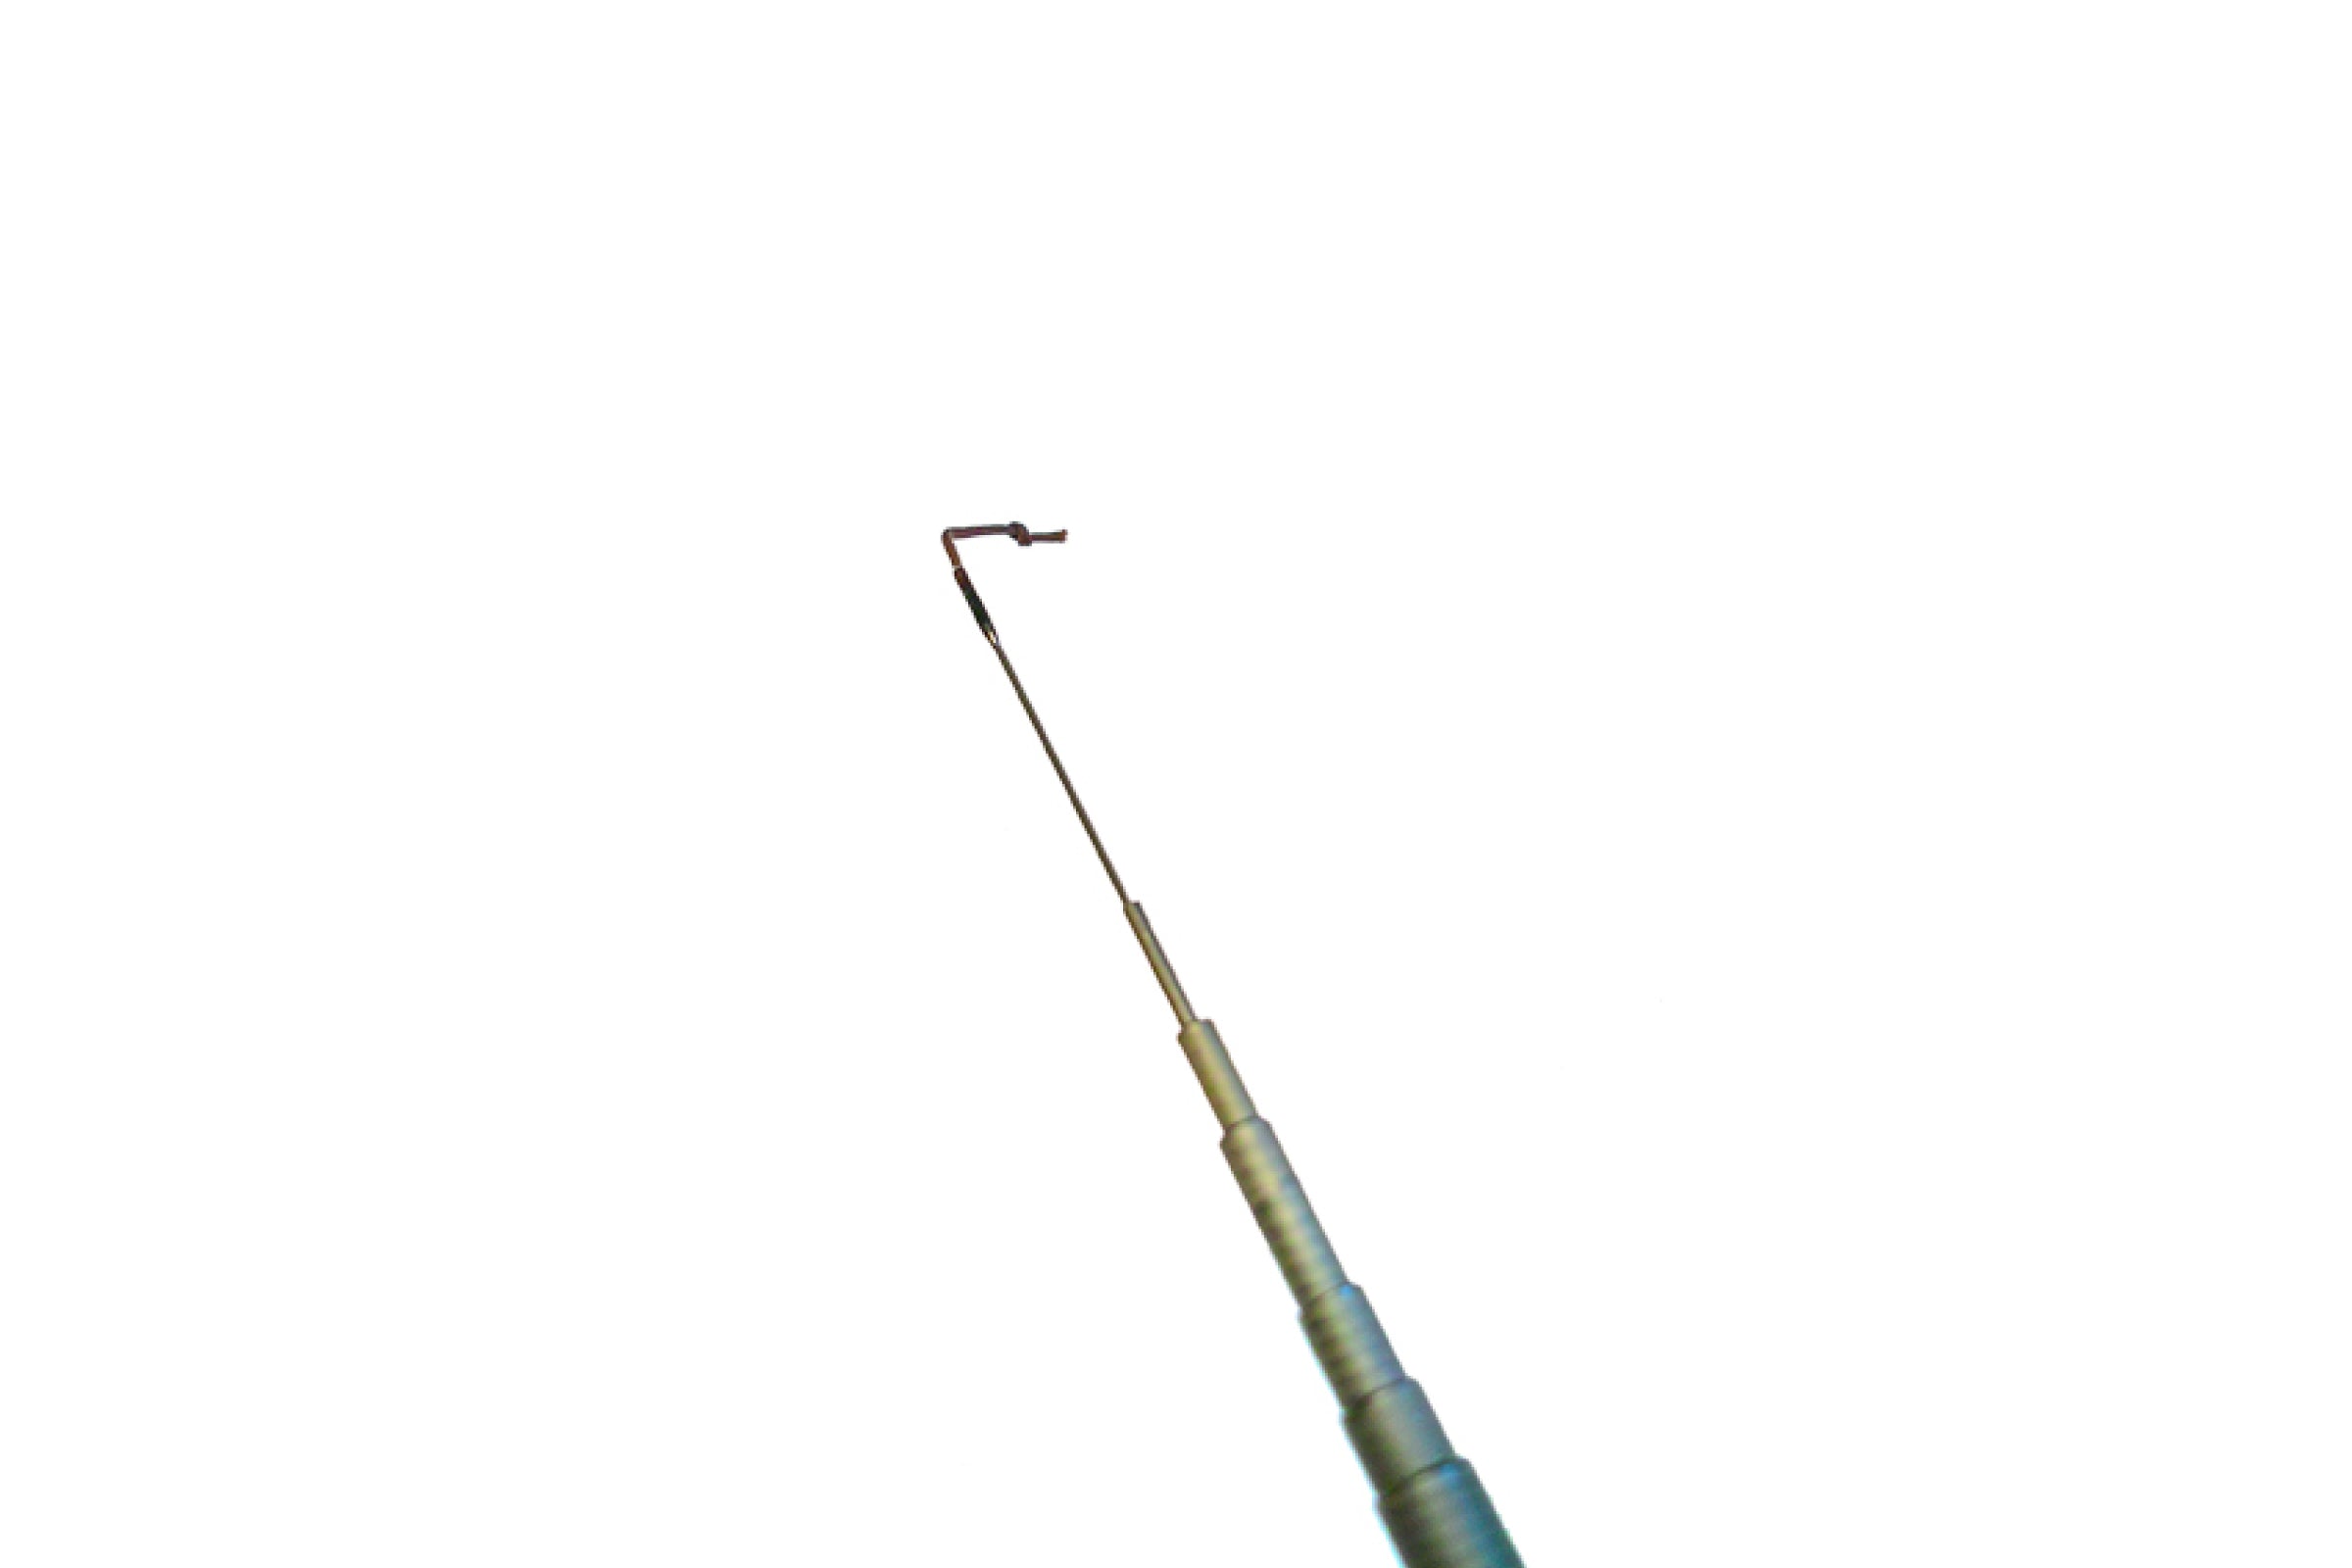 How to fix or repair the tip of broken Tenkara fishing pole. 